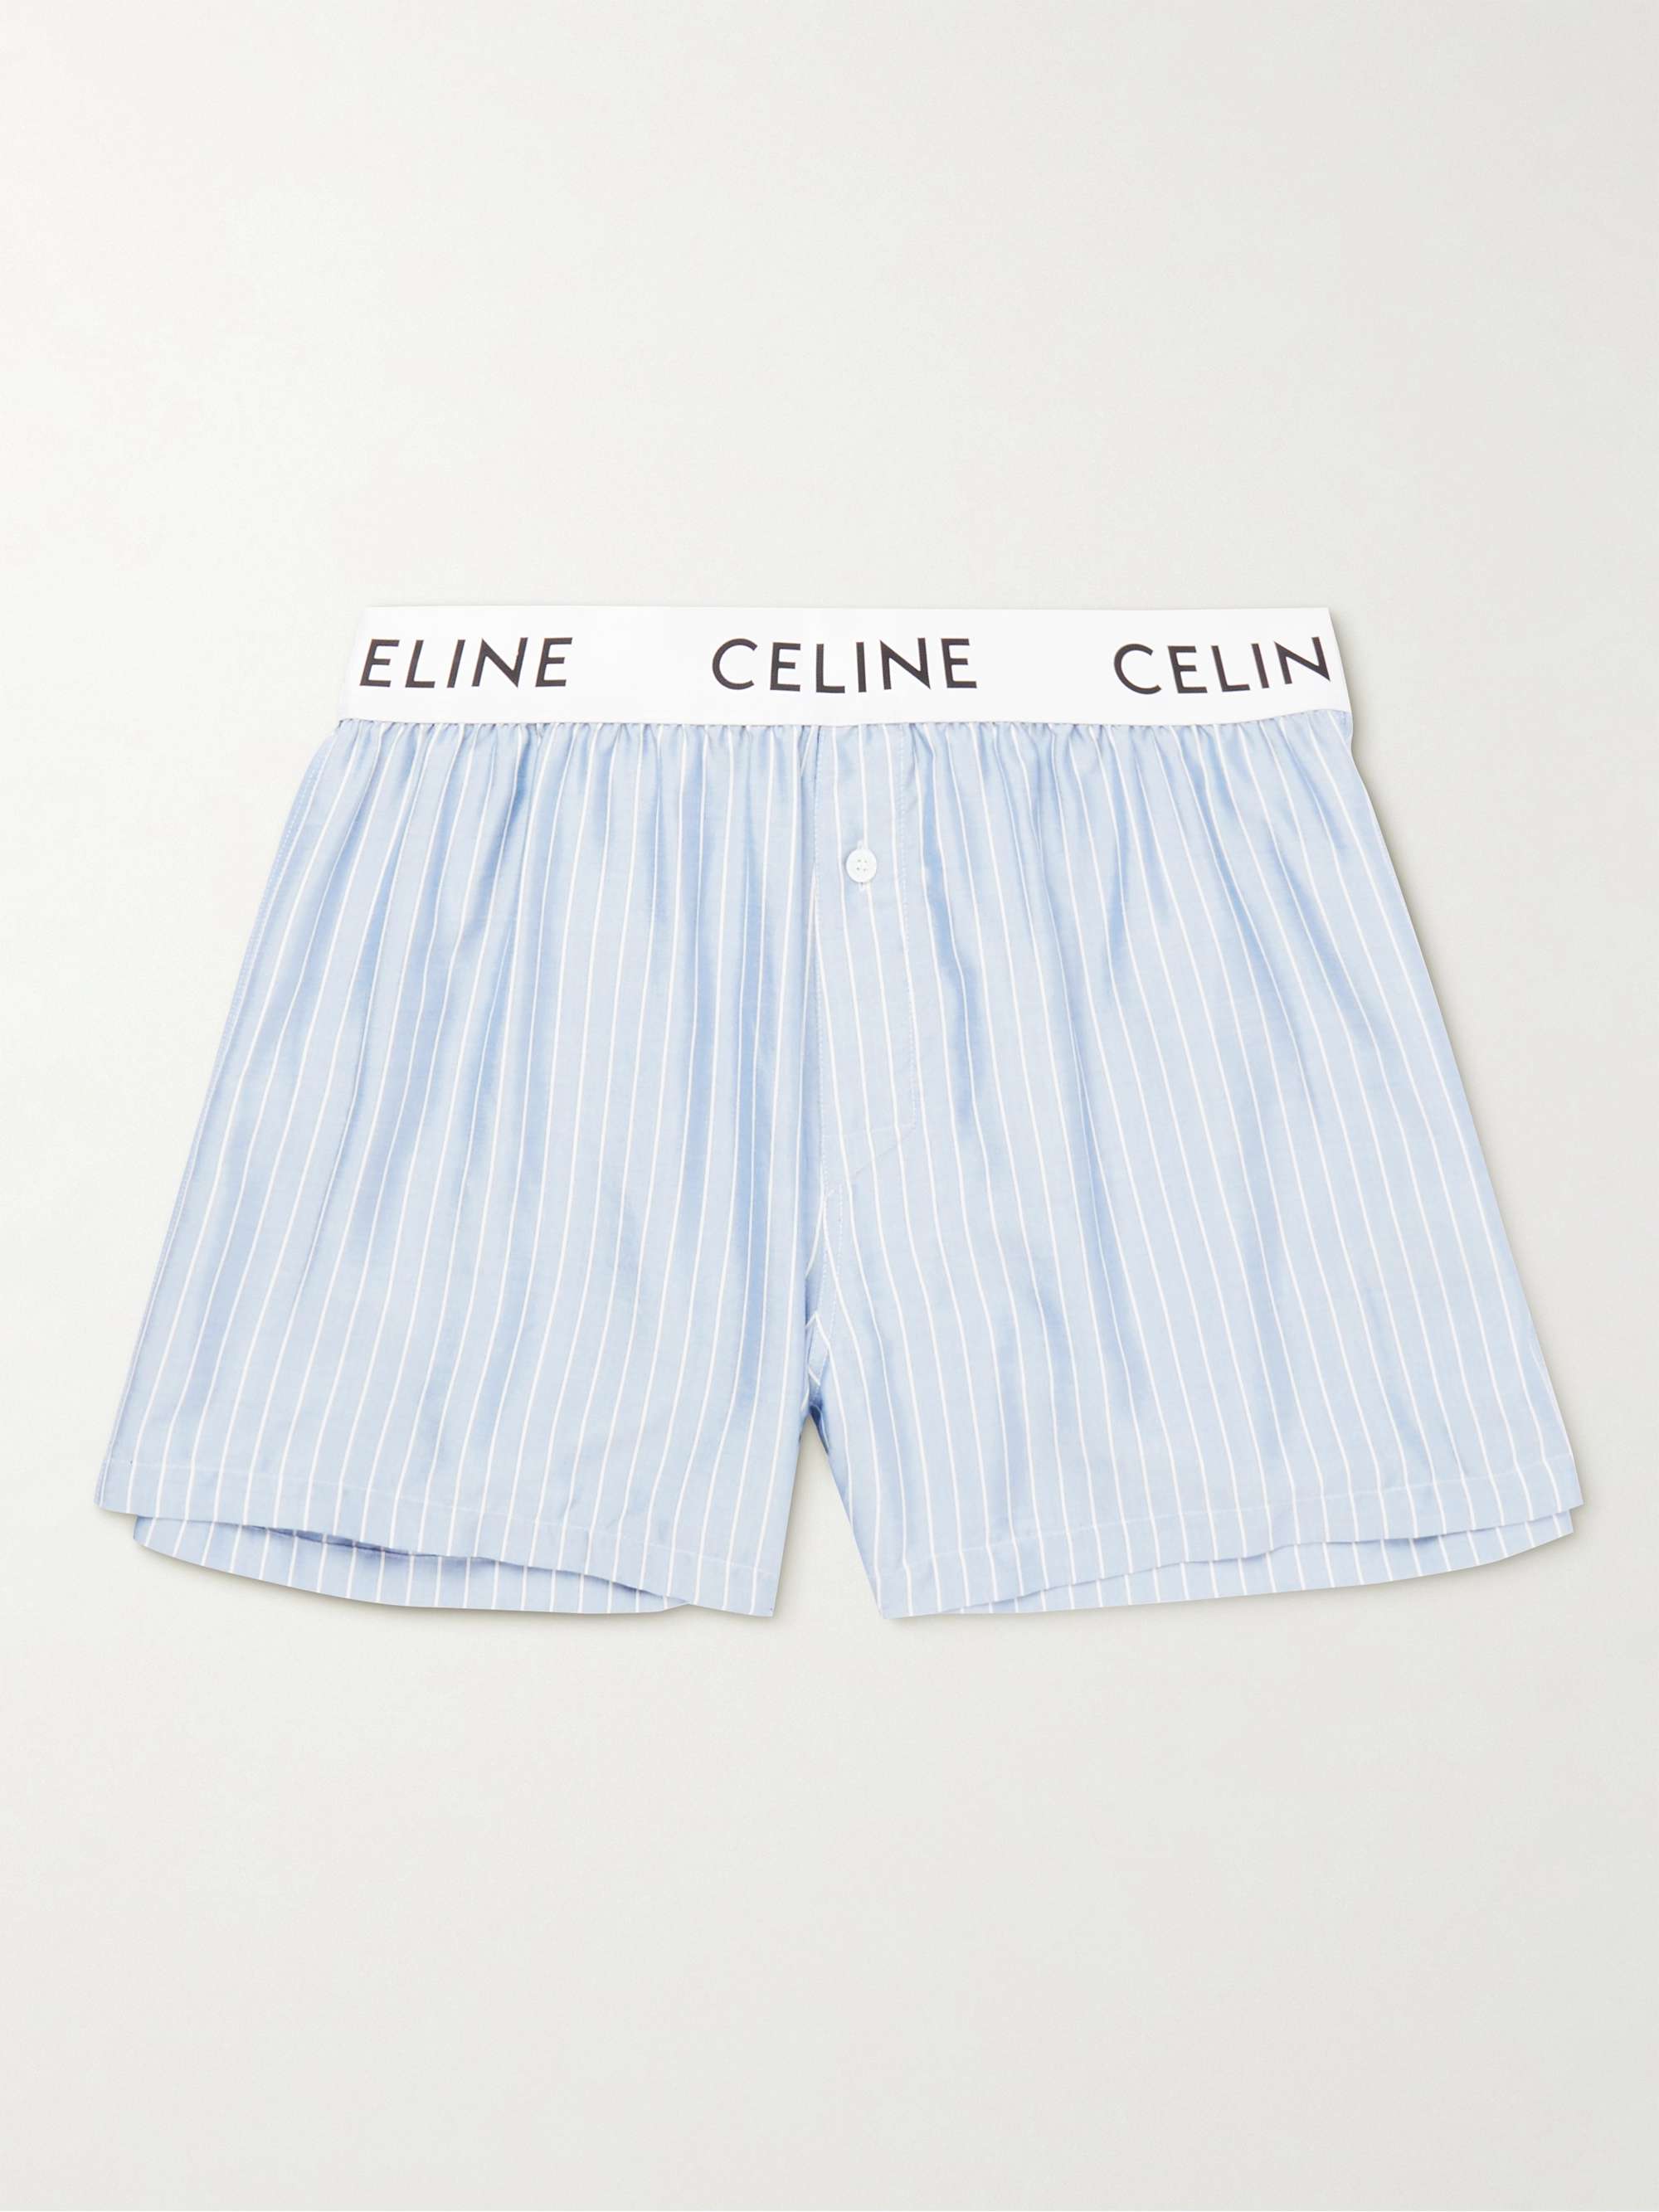 CELINE HOMME Straight-Leg Striped Silk Pyjama Shorts